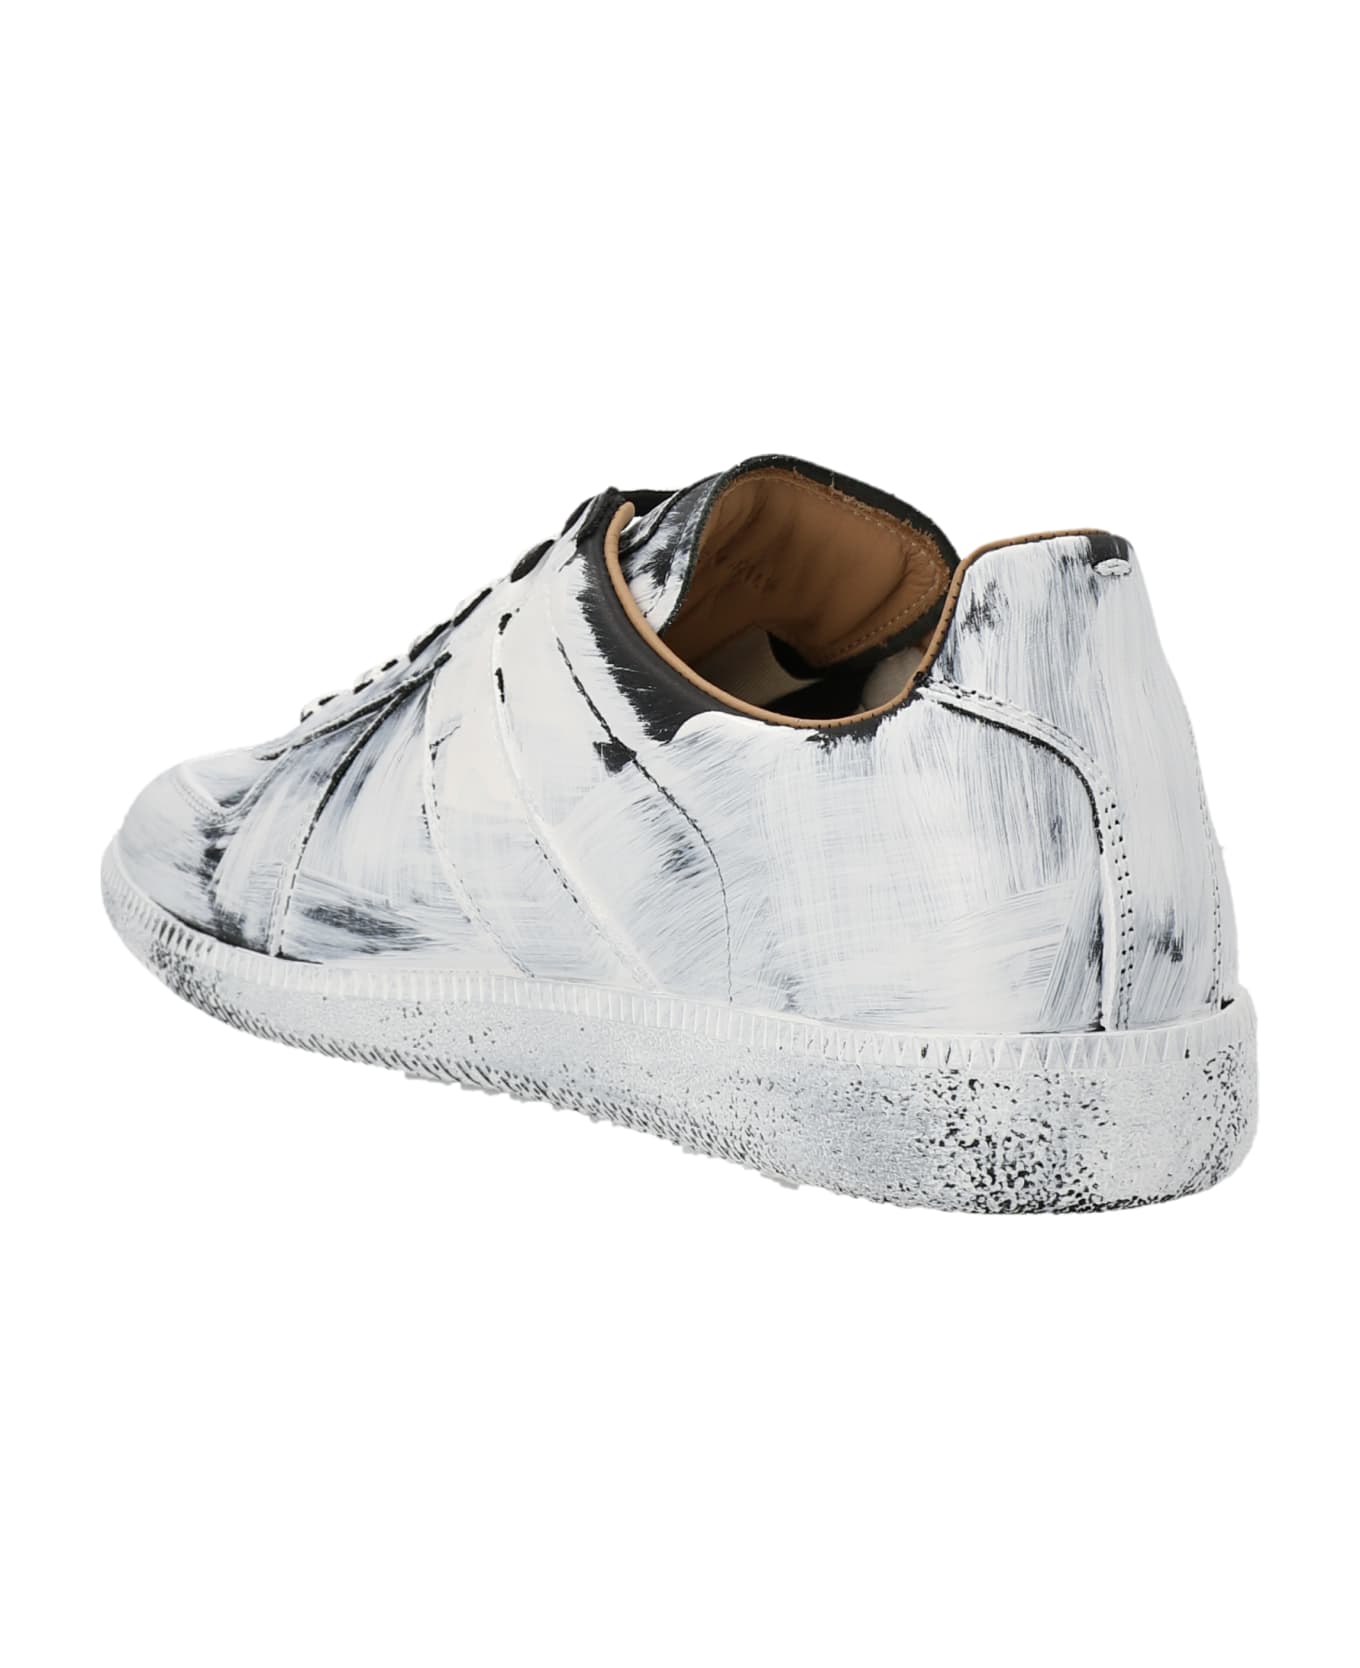 Maison Margiela 'replica' Sneakers - White/Black スニーカー